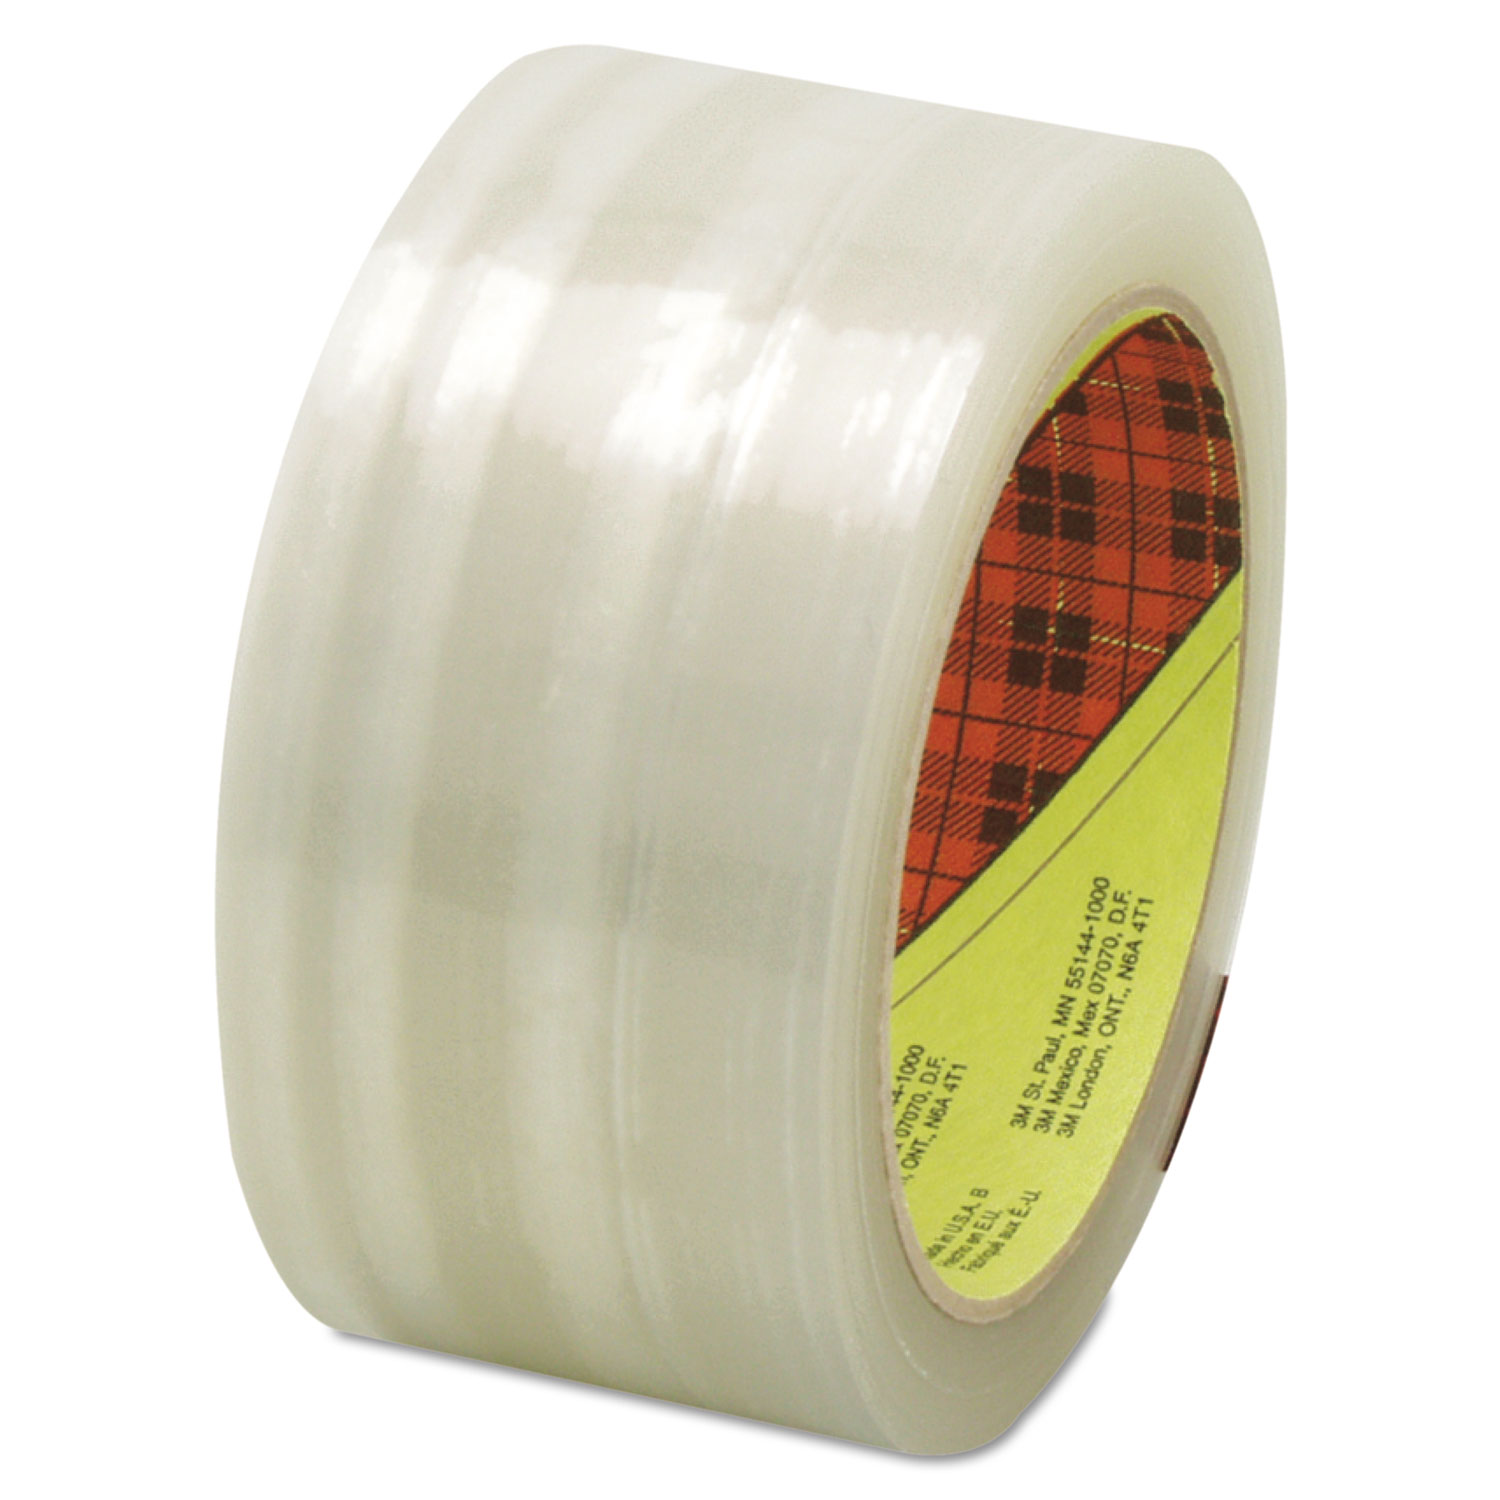  Scotch 70006182599 Scotch 373 High Performance Box Sealing Tape, 48 mm x 50 m, Clear (MMM2120072368) 